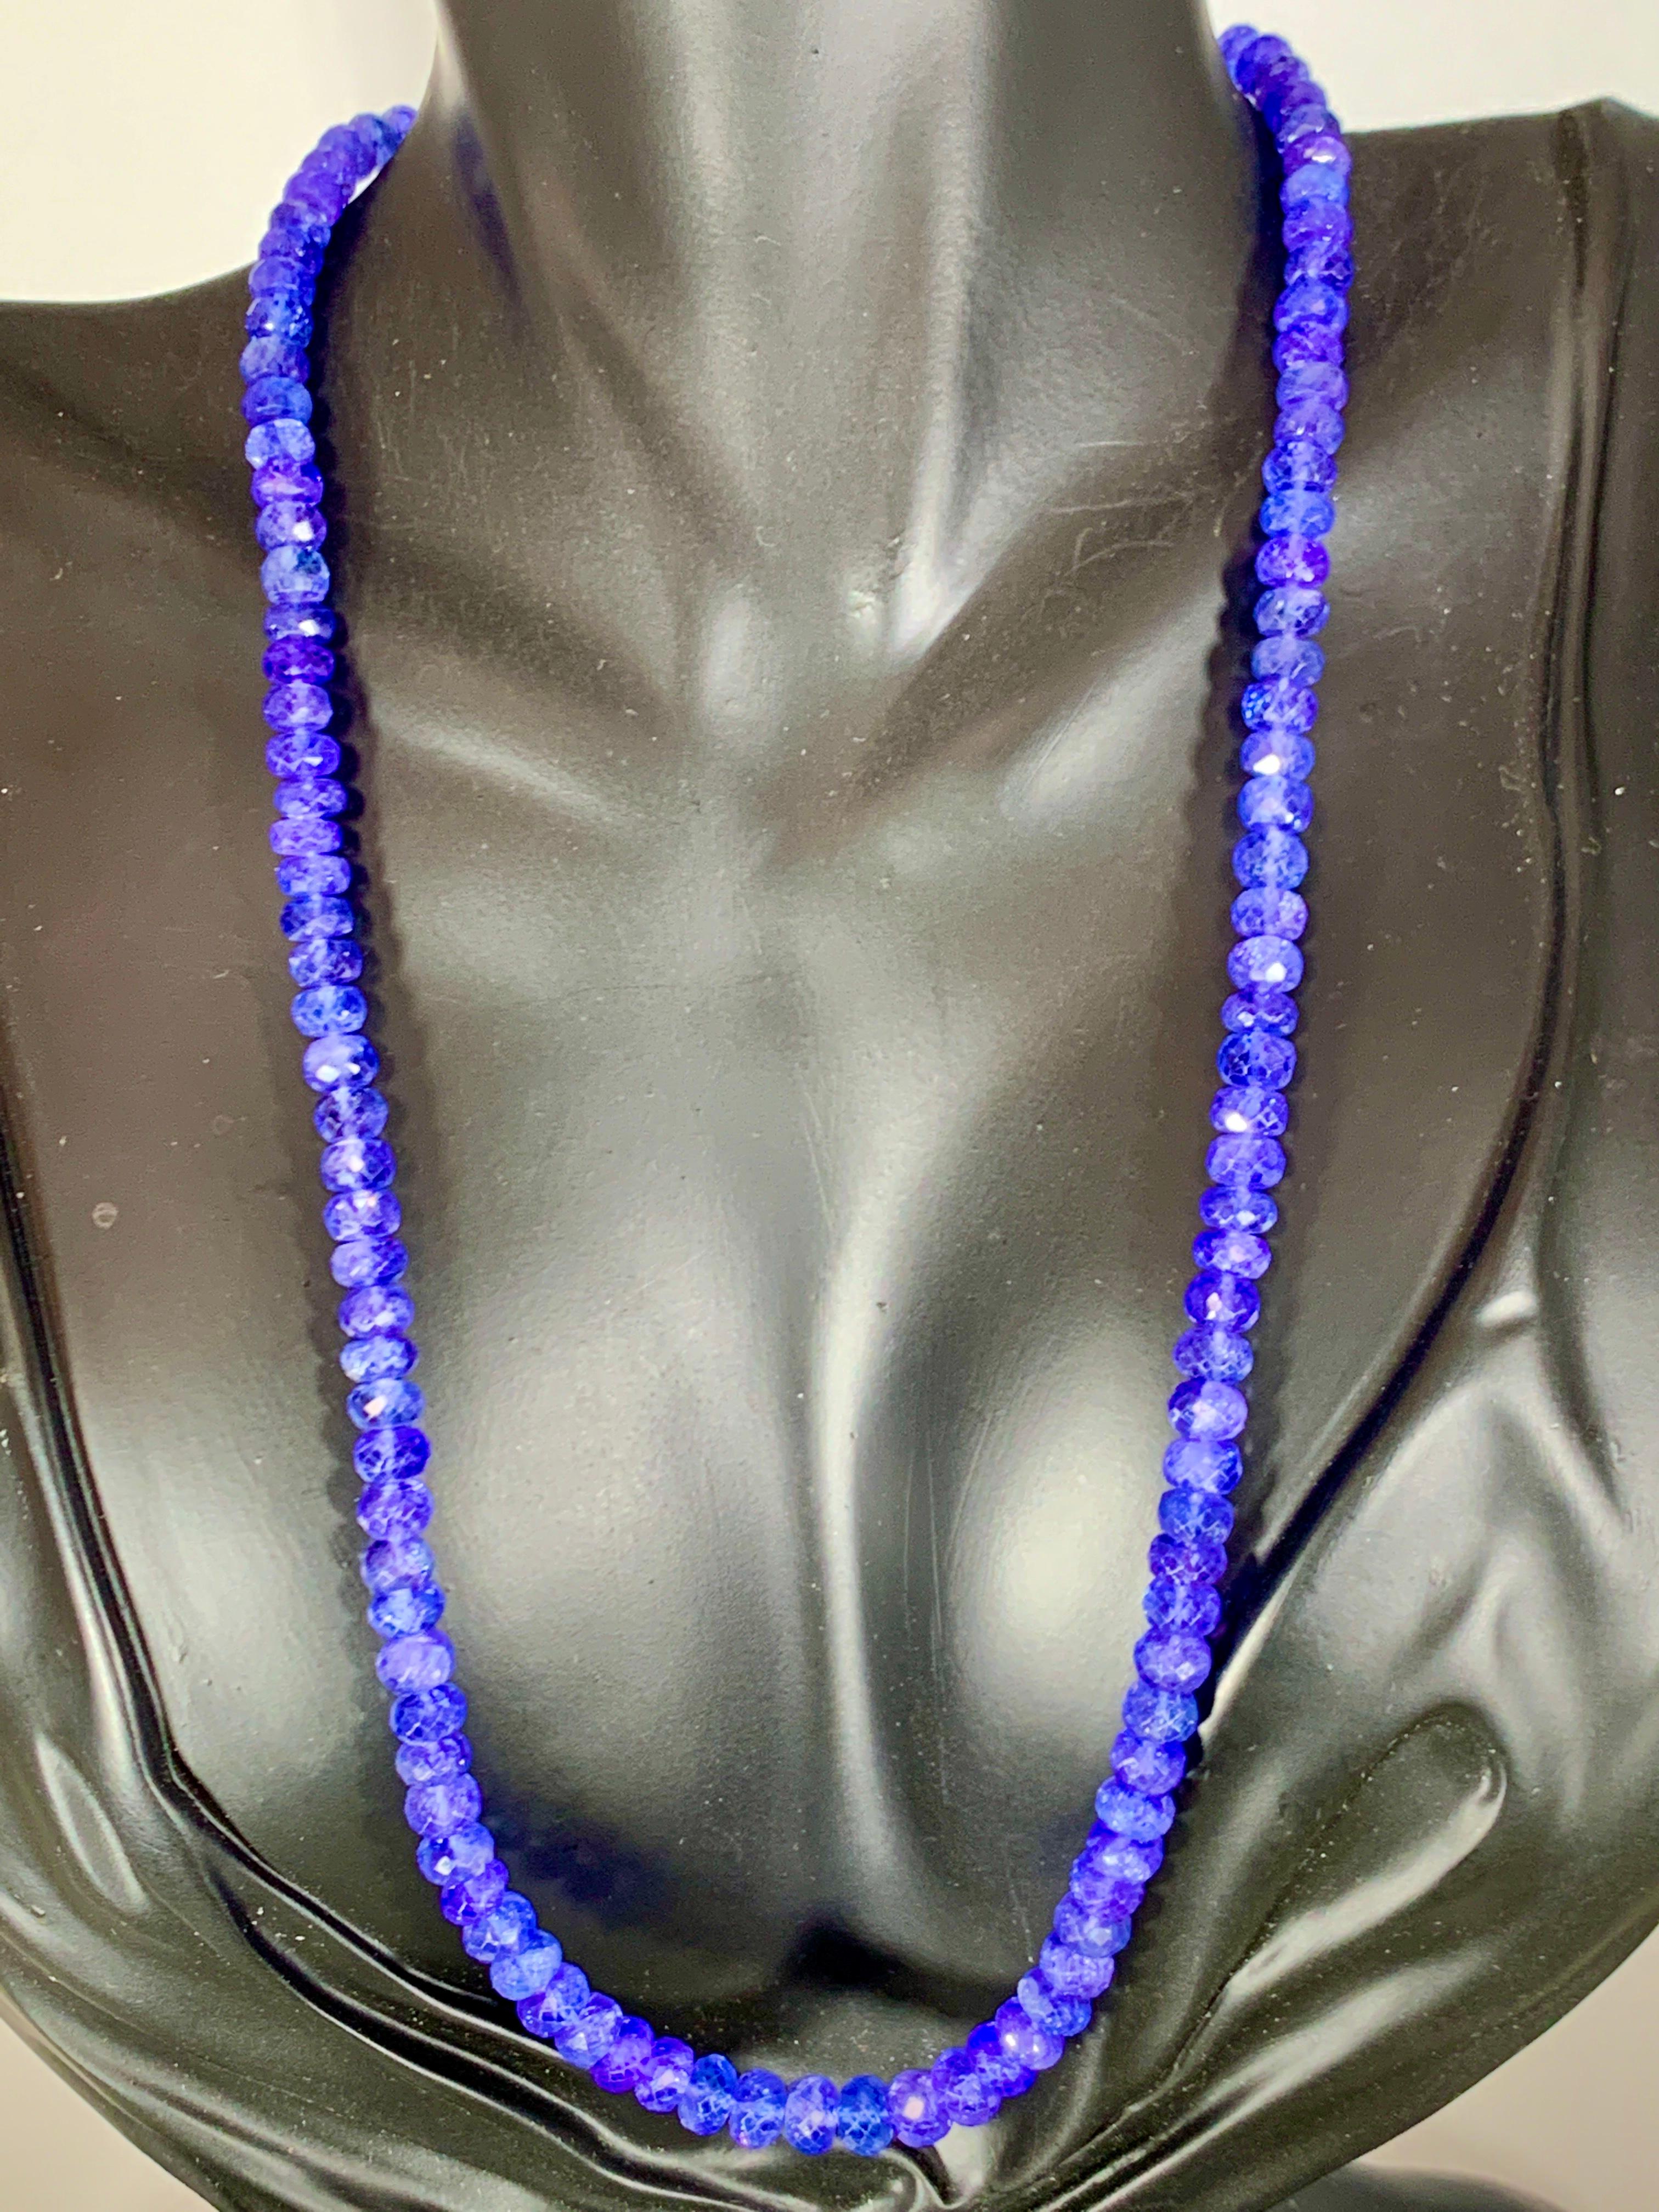 navy blue beads